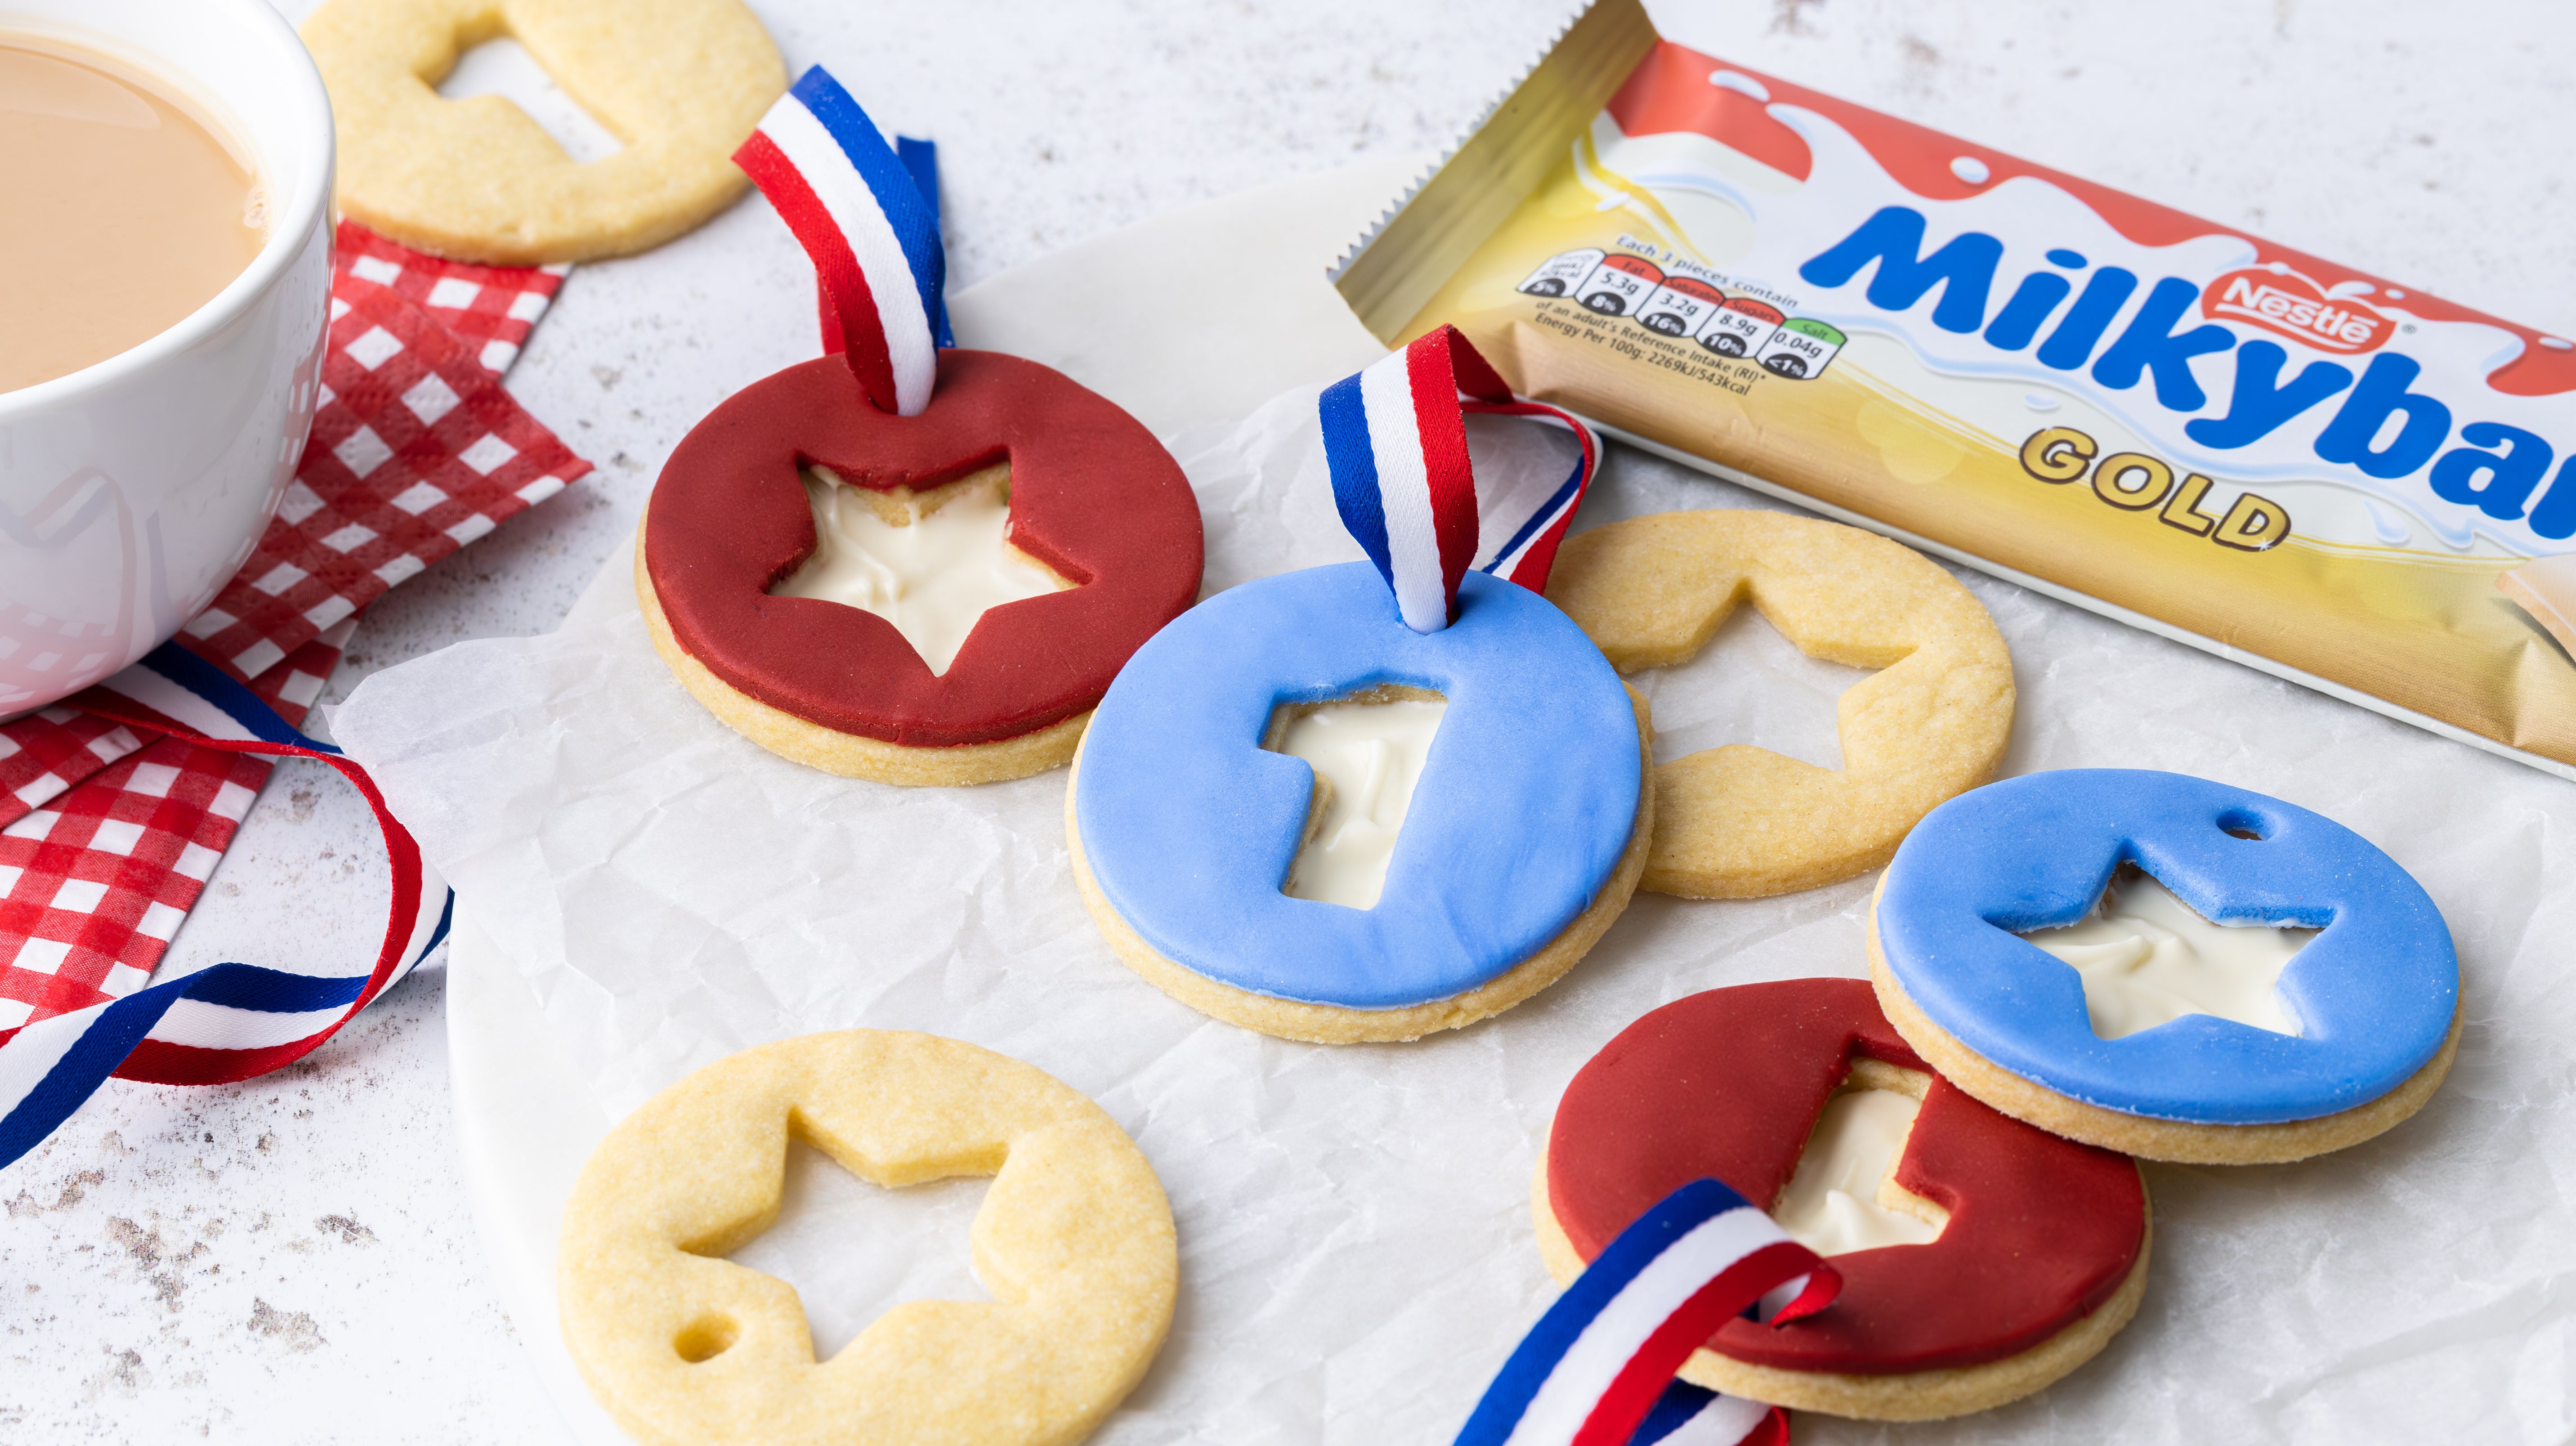 MILKYBAR X JessieBakesCakes Gold Medal Biscuits